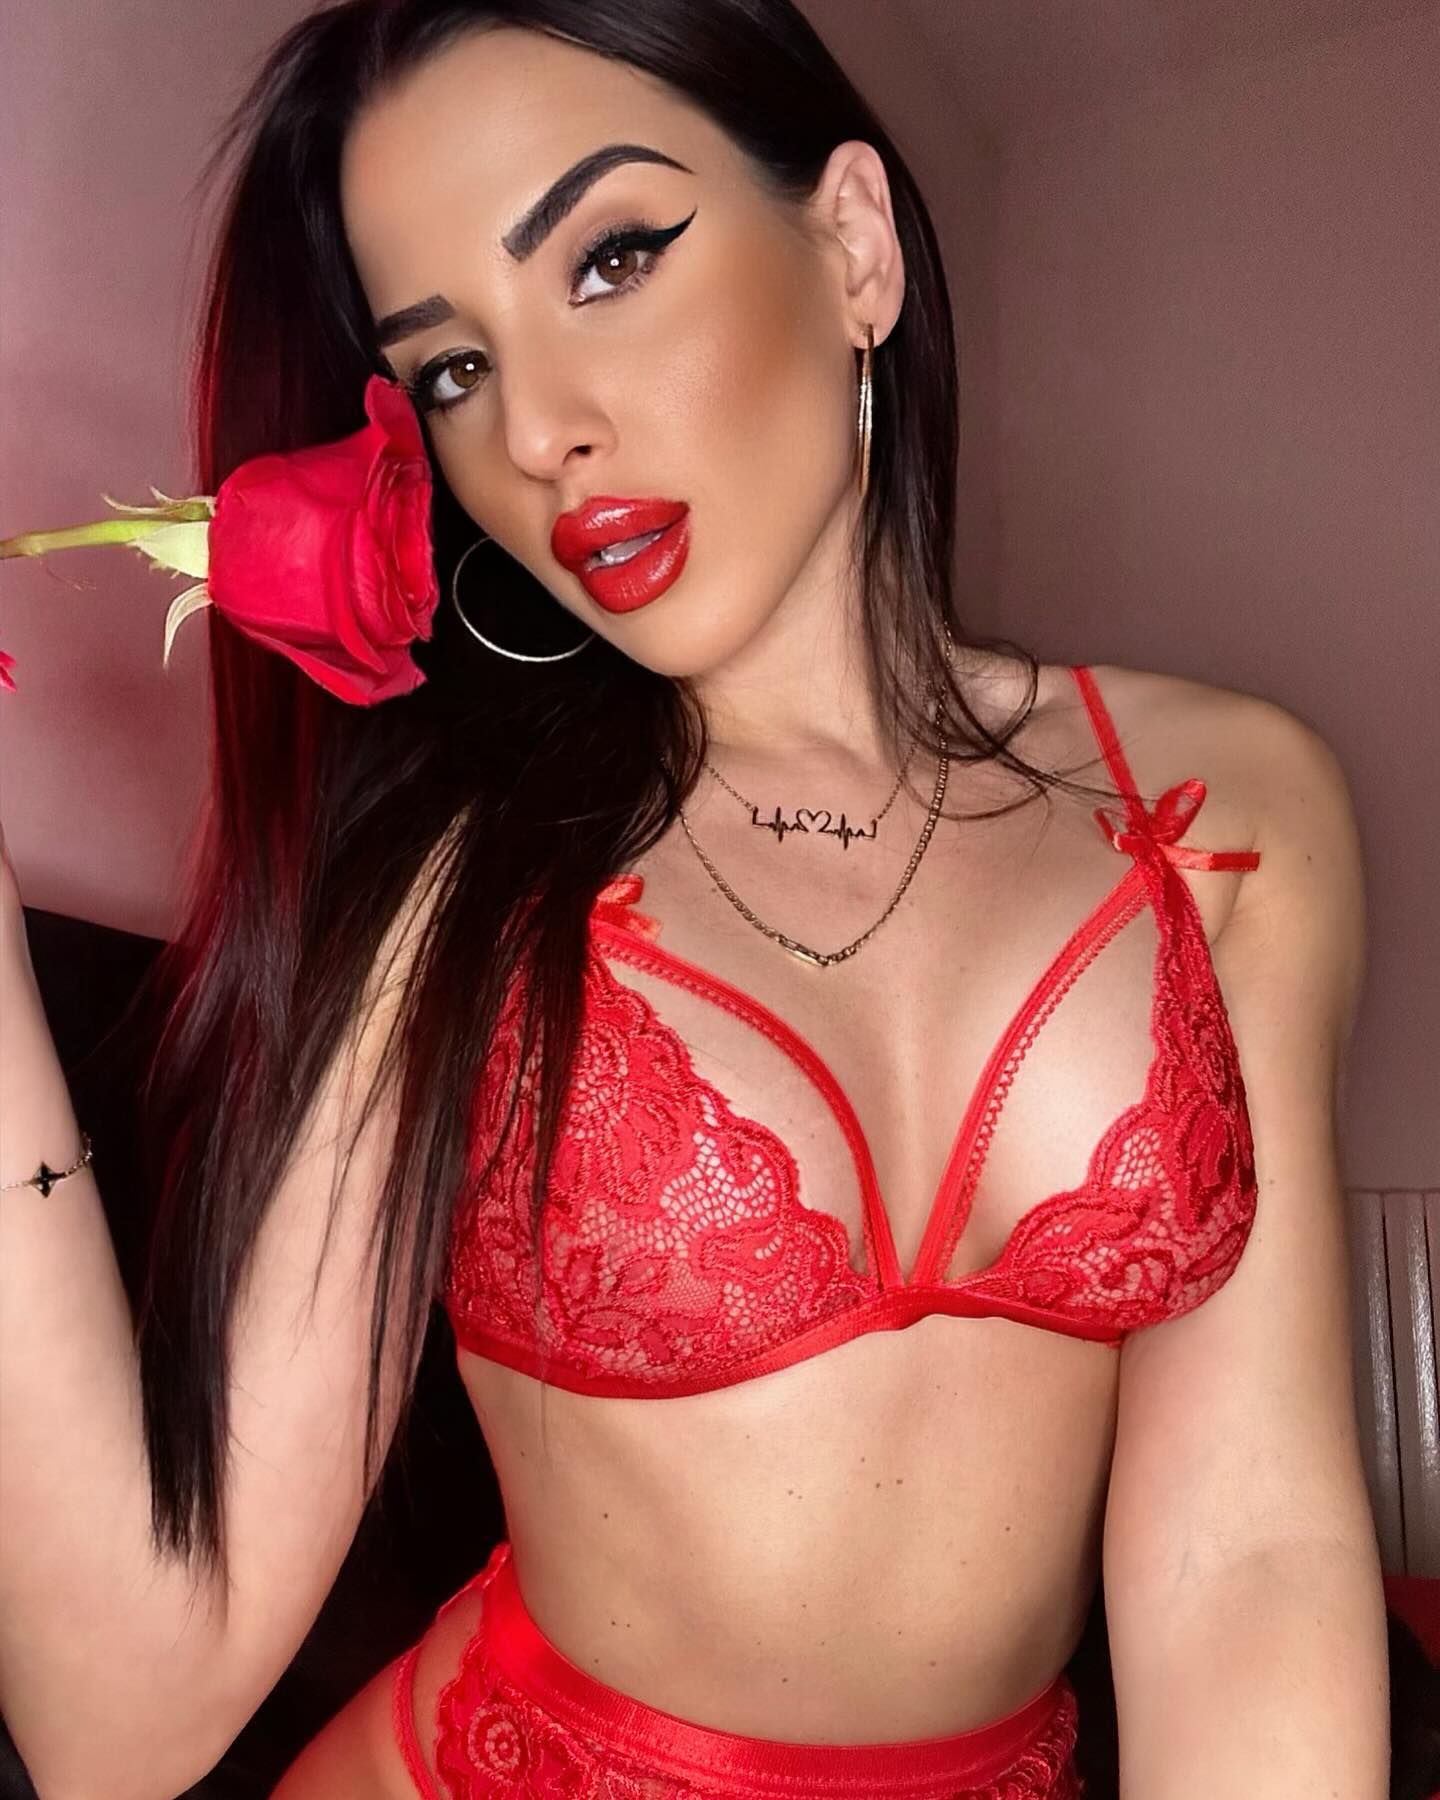 🌹Abella Angel 🥀
Chi vuole una rosa 
deve rispettarne 
le spine🥀
#rose #passion #flowers #lingerie #redlips #redlingerie #slave2beauty #bedroomdecor #stockings #loveit #contentcreator